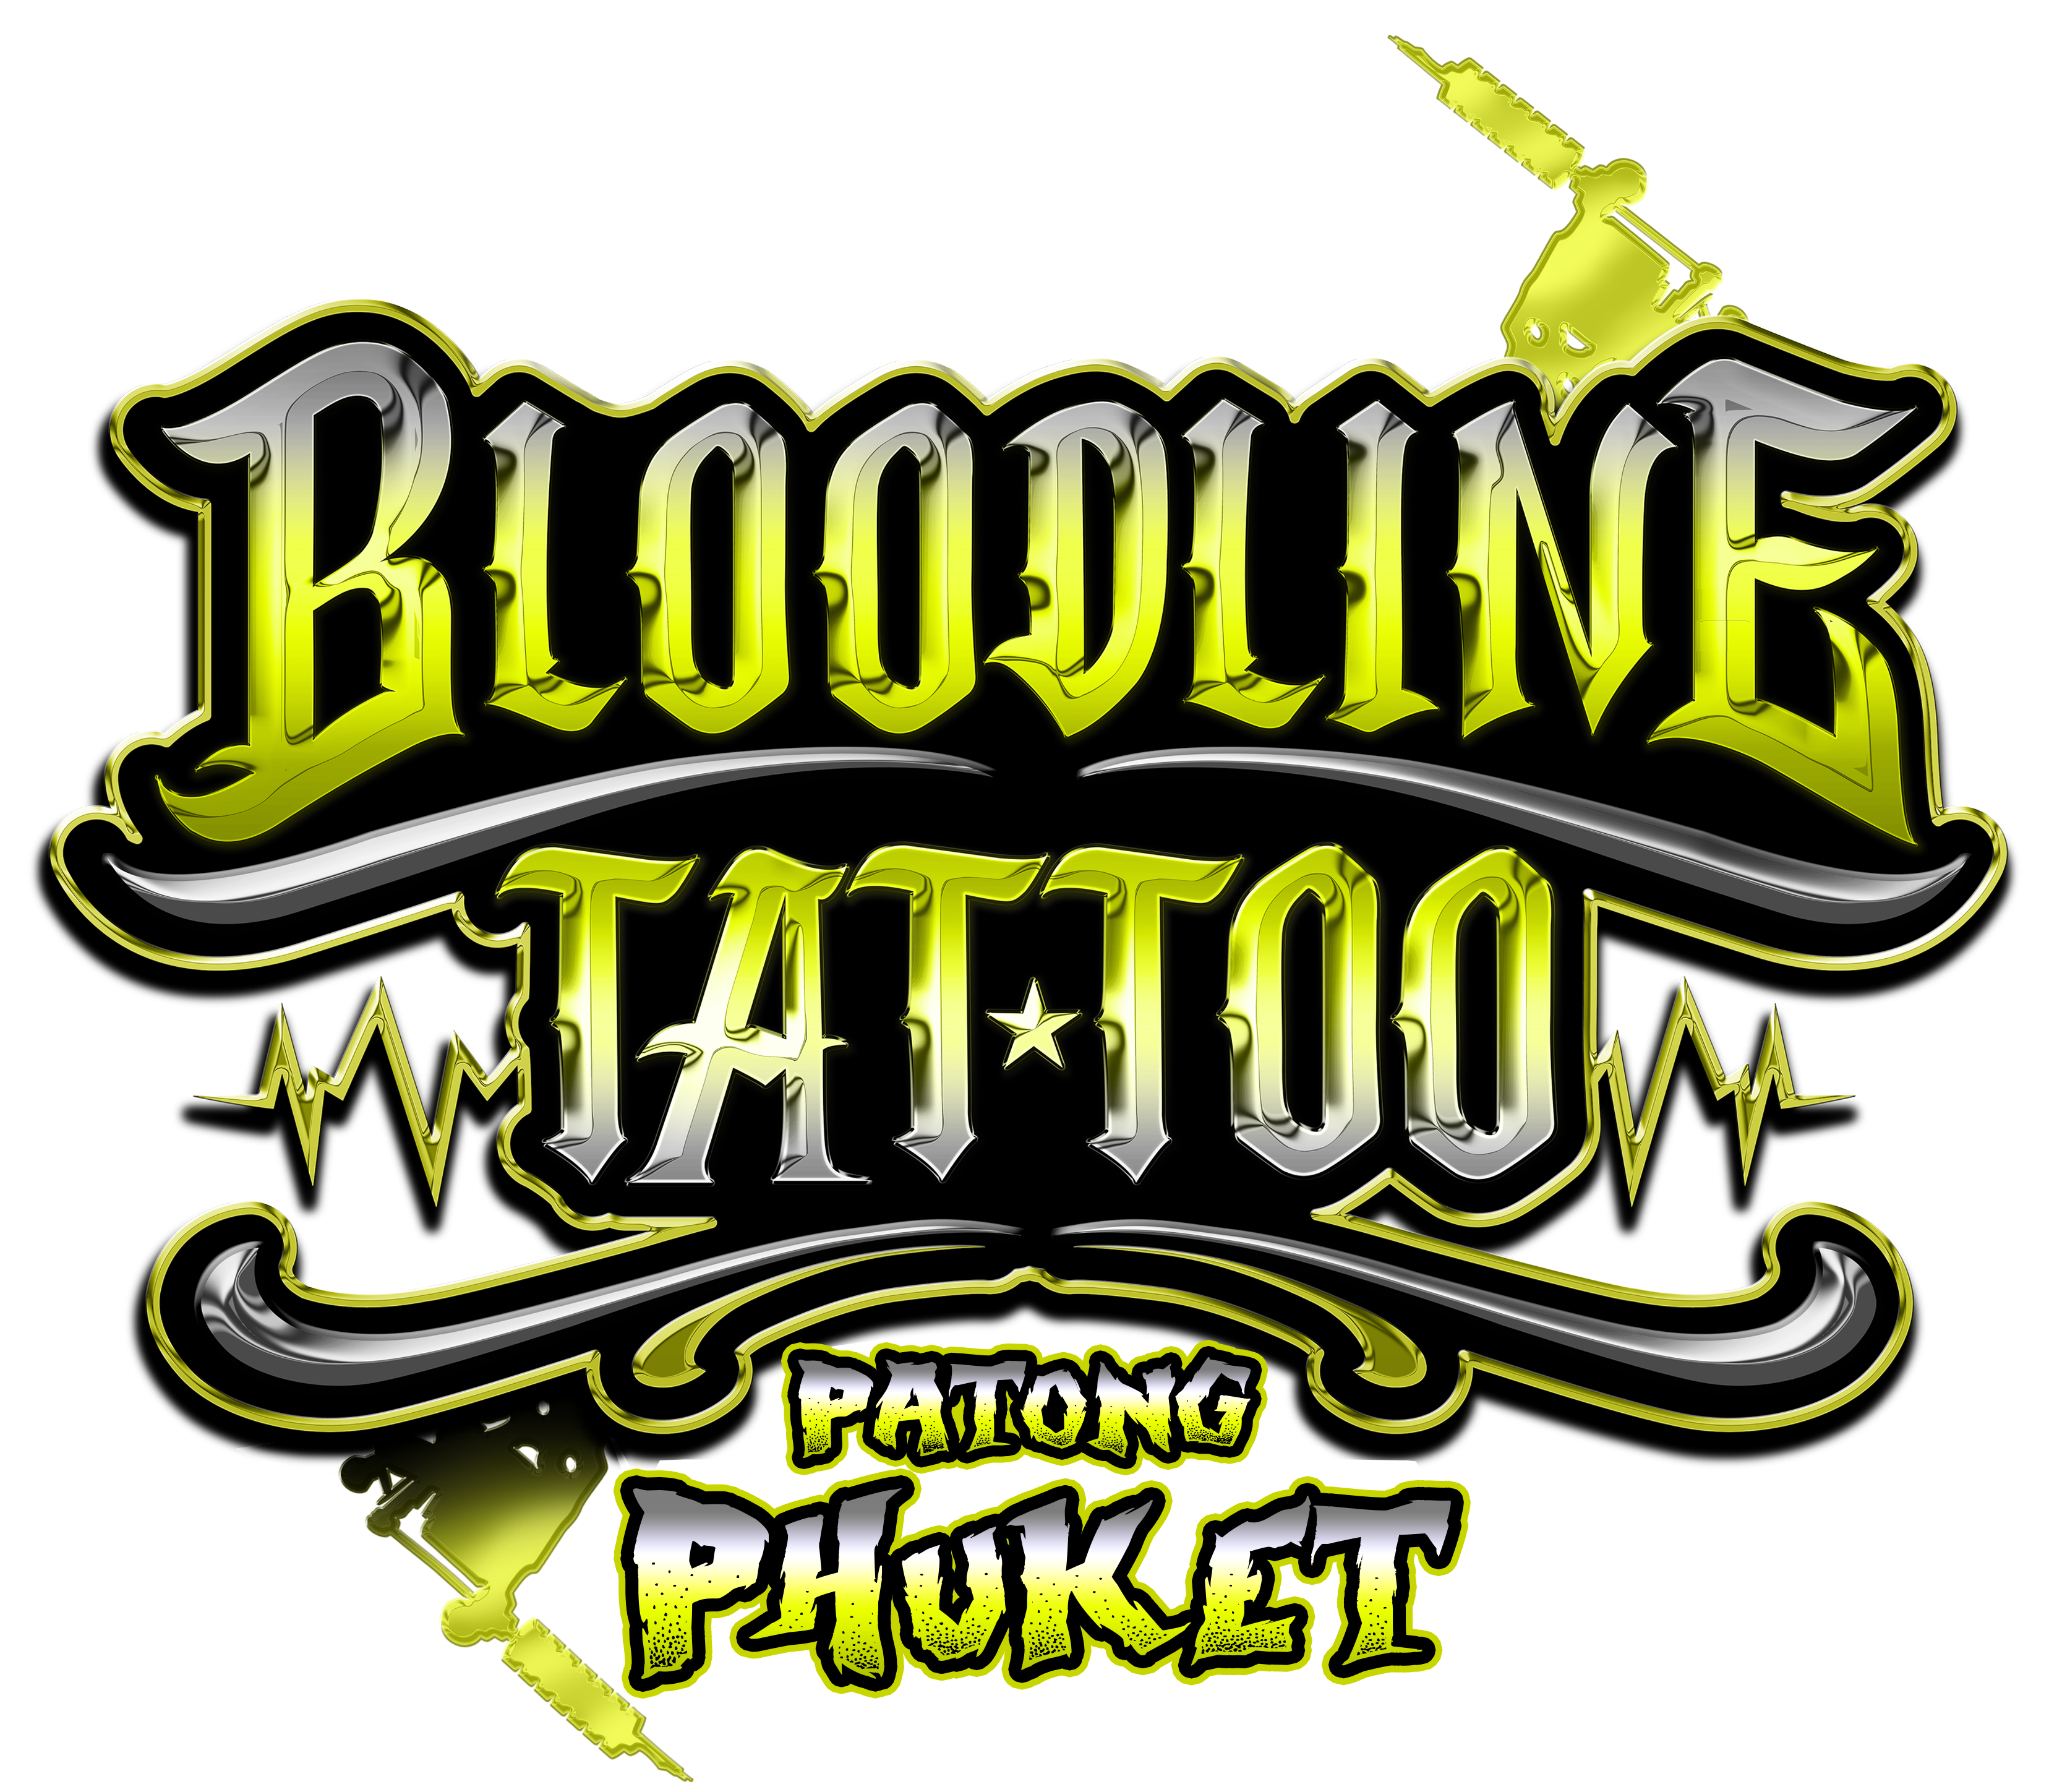 Bloodline-logo